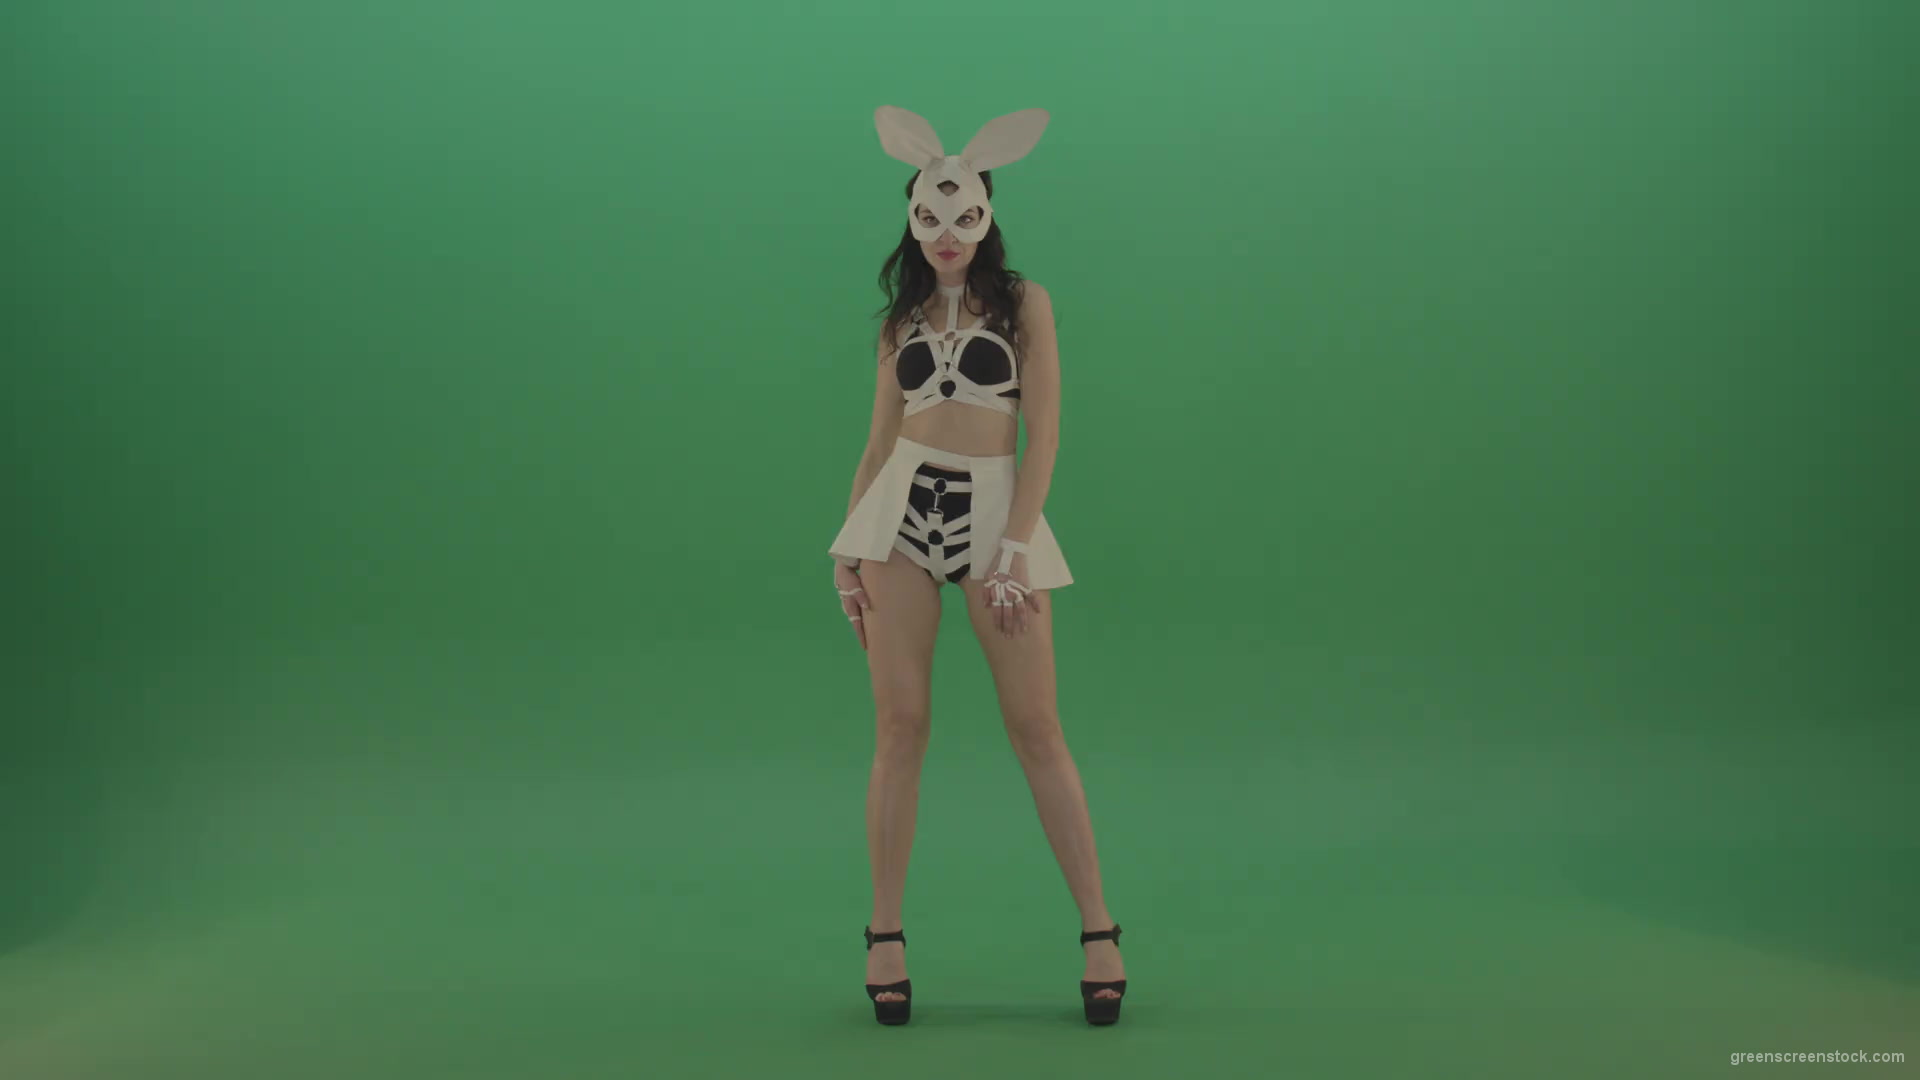 Sexy-posing-Bunny-Girl-dancing-Go-Go-Rabbit-Dance-over-Green-Screen-1920_001 Green Screen Stock